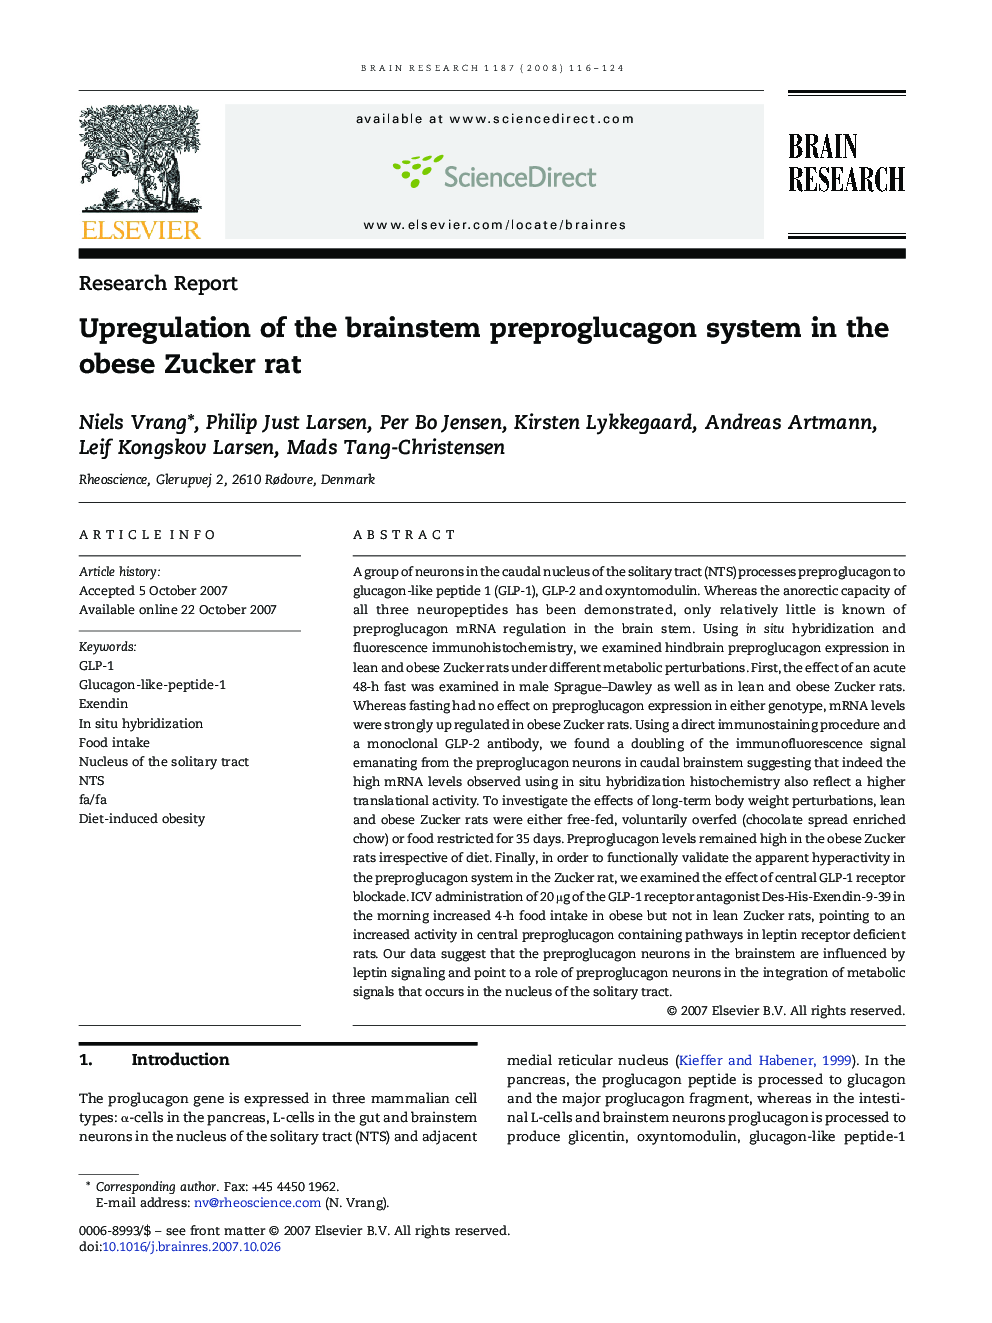 Upregulation of the brainstem preproglucagon system in the obese Zucker rat